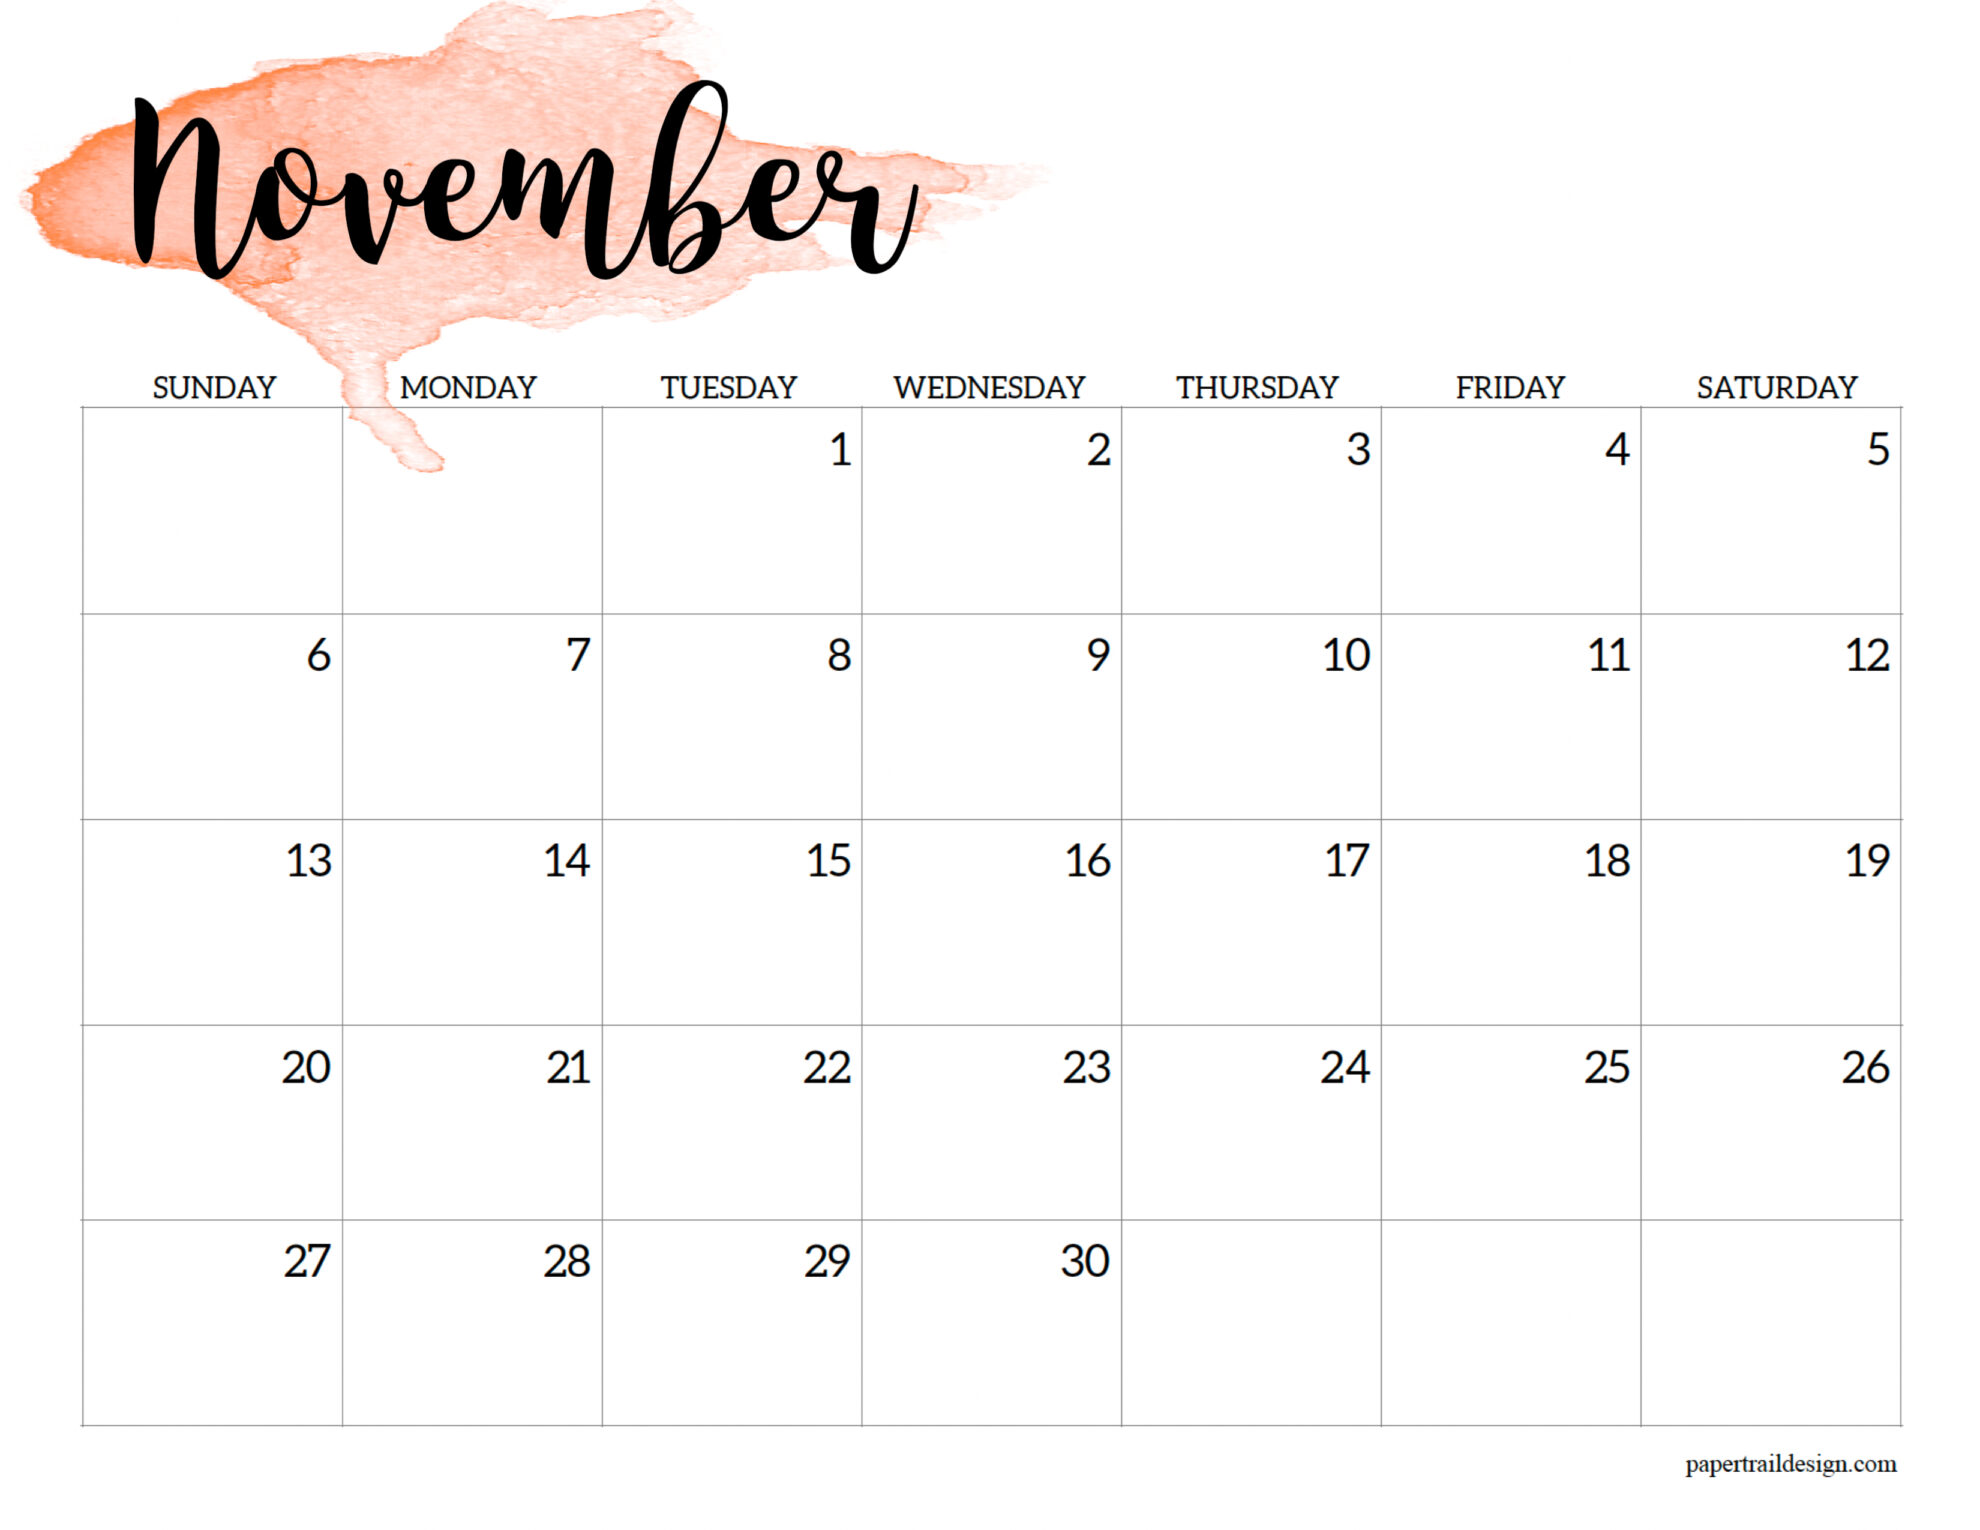 Nov 2022 Calendar Printable 2022 Calendar Printable - Watercolor - Paper Trail Design